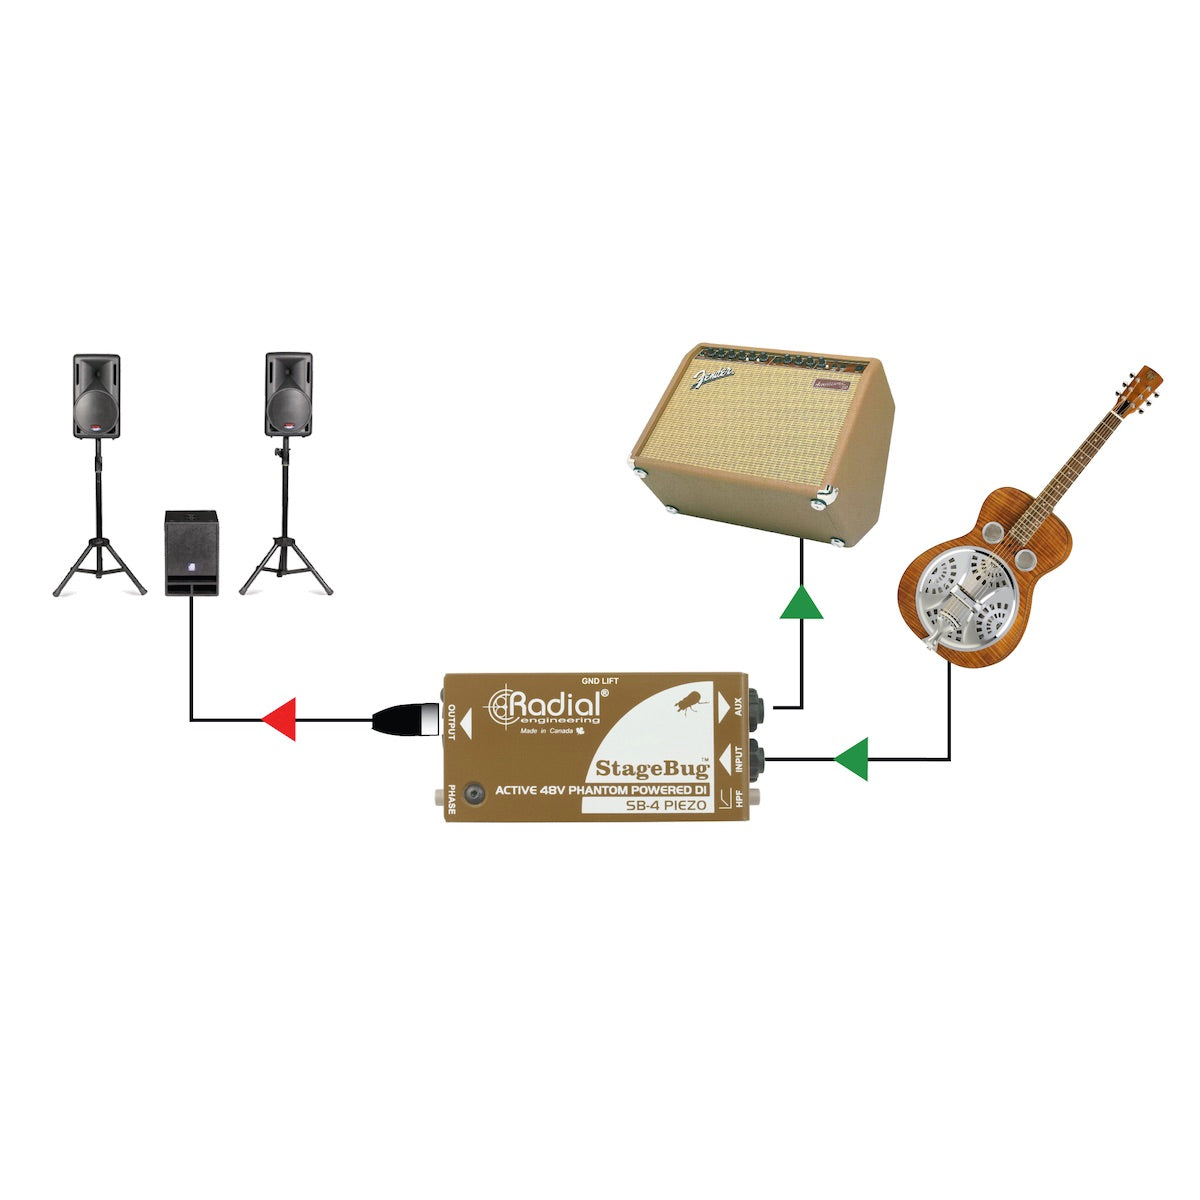 Radial StageBug SB-4 Piezo - Compact Active Direct Box for Piezo Pickups, application diagram